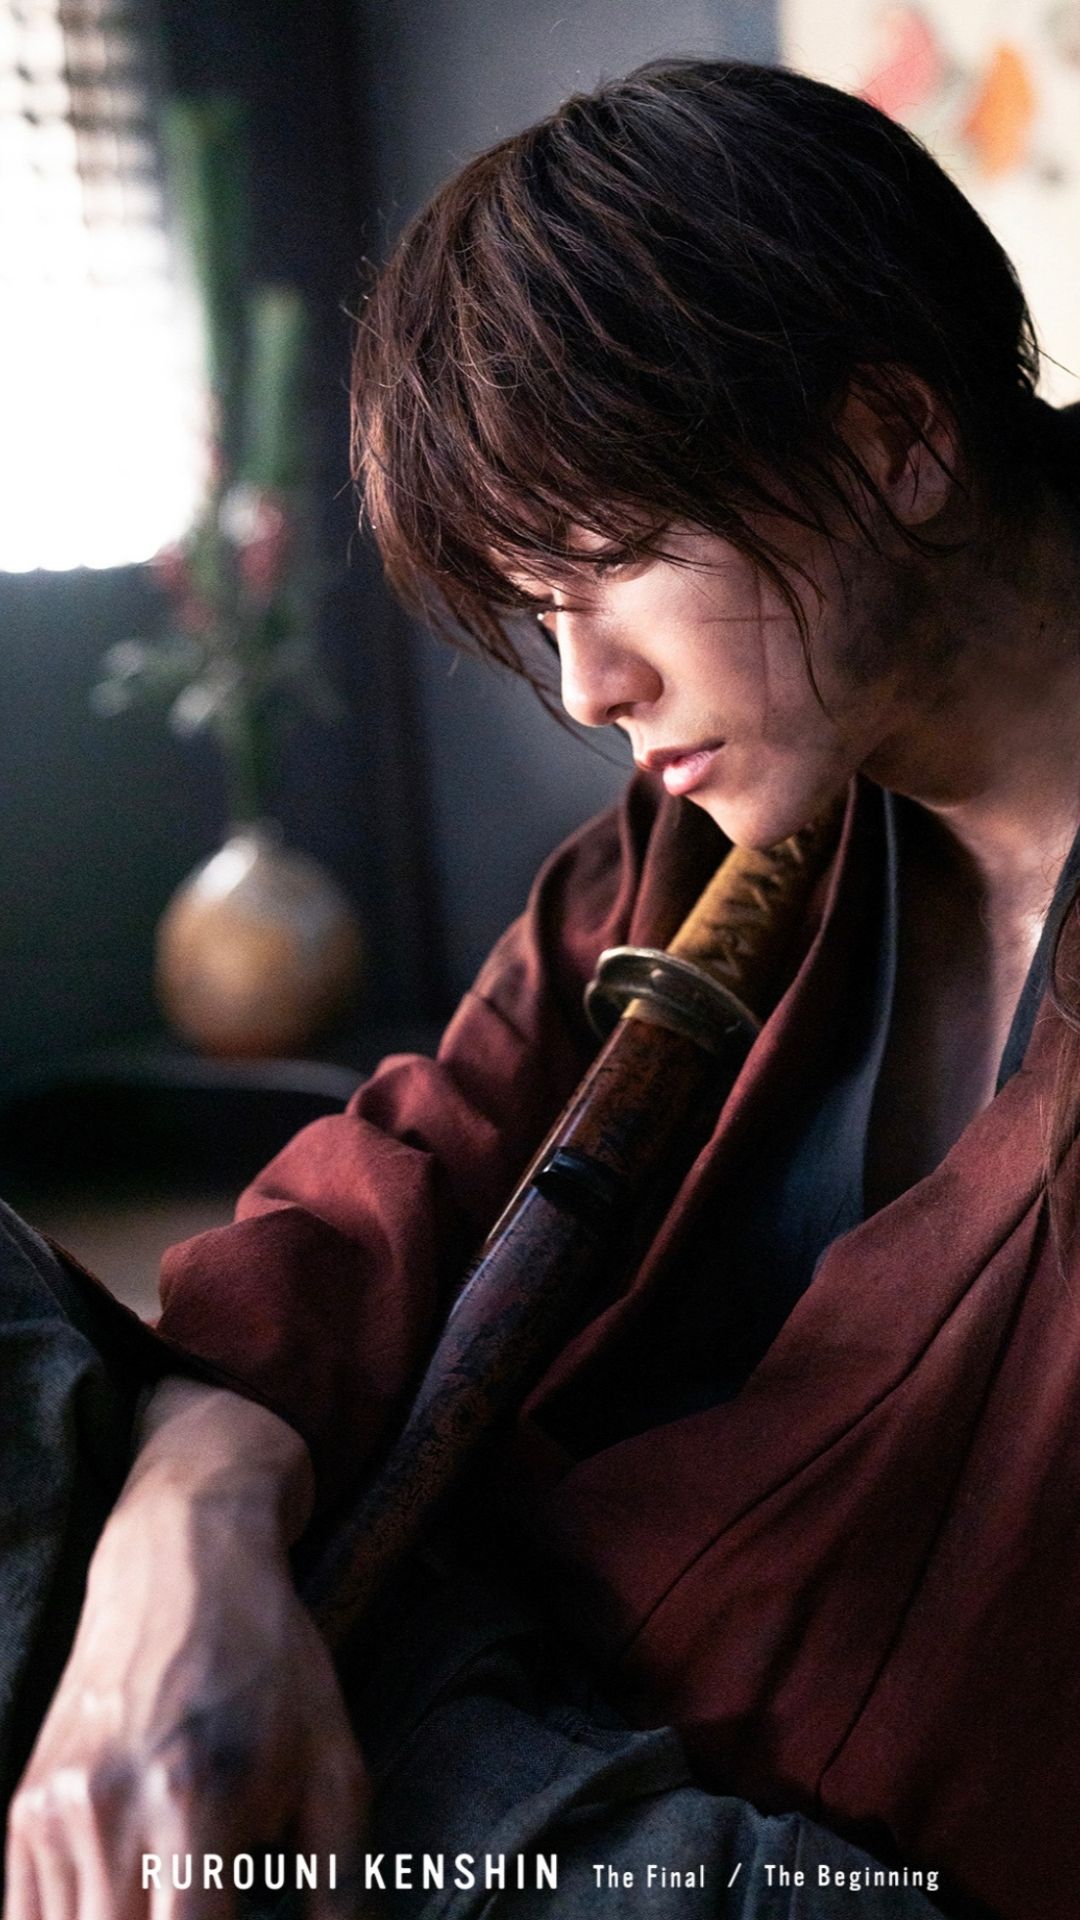 Rurouni Kenshin The Beginning Trailer Poster June Debut